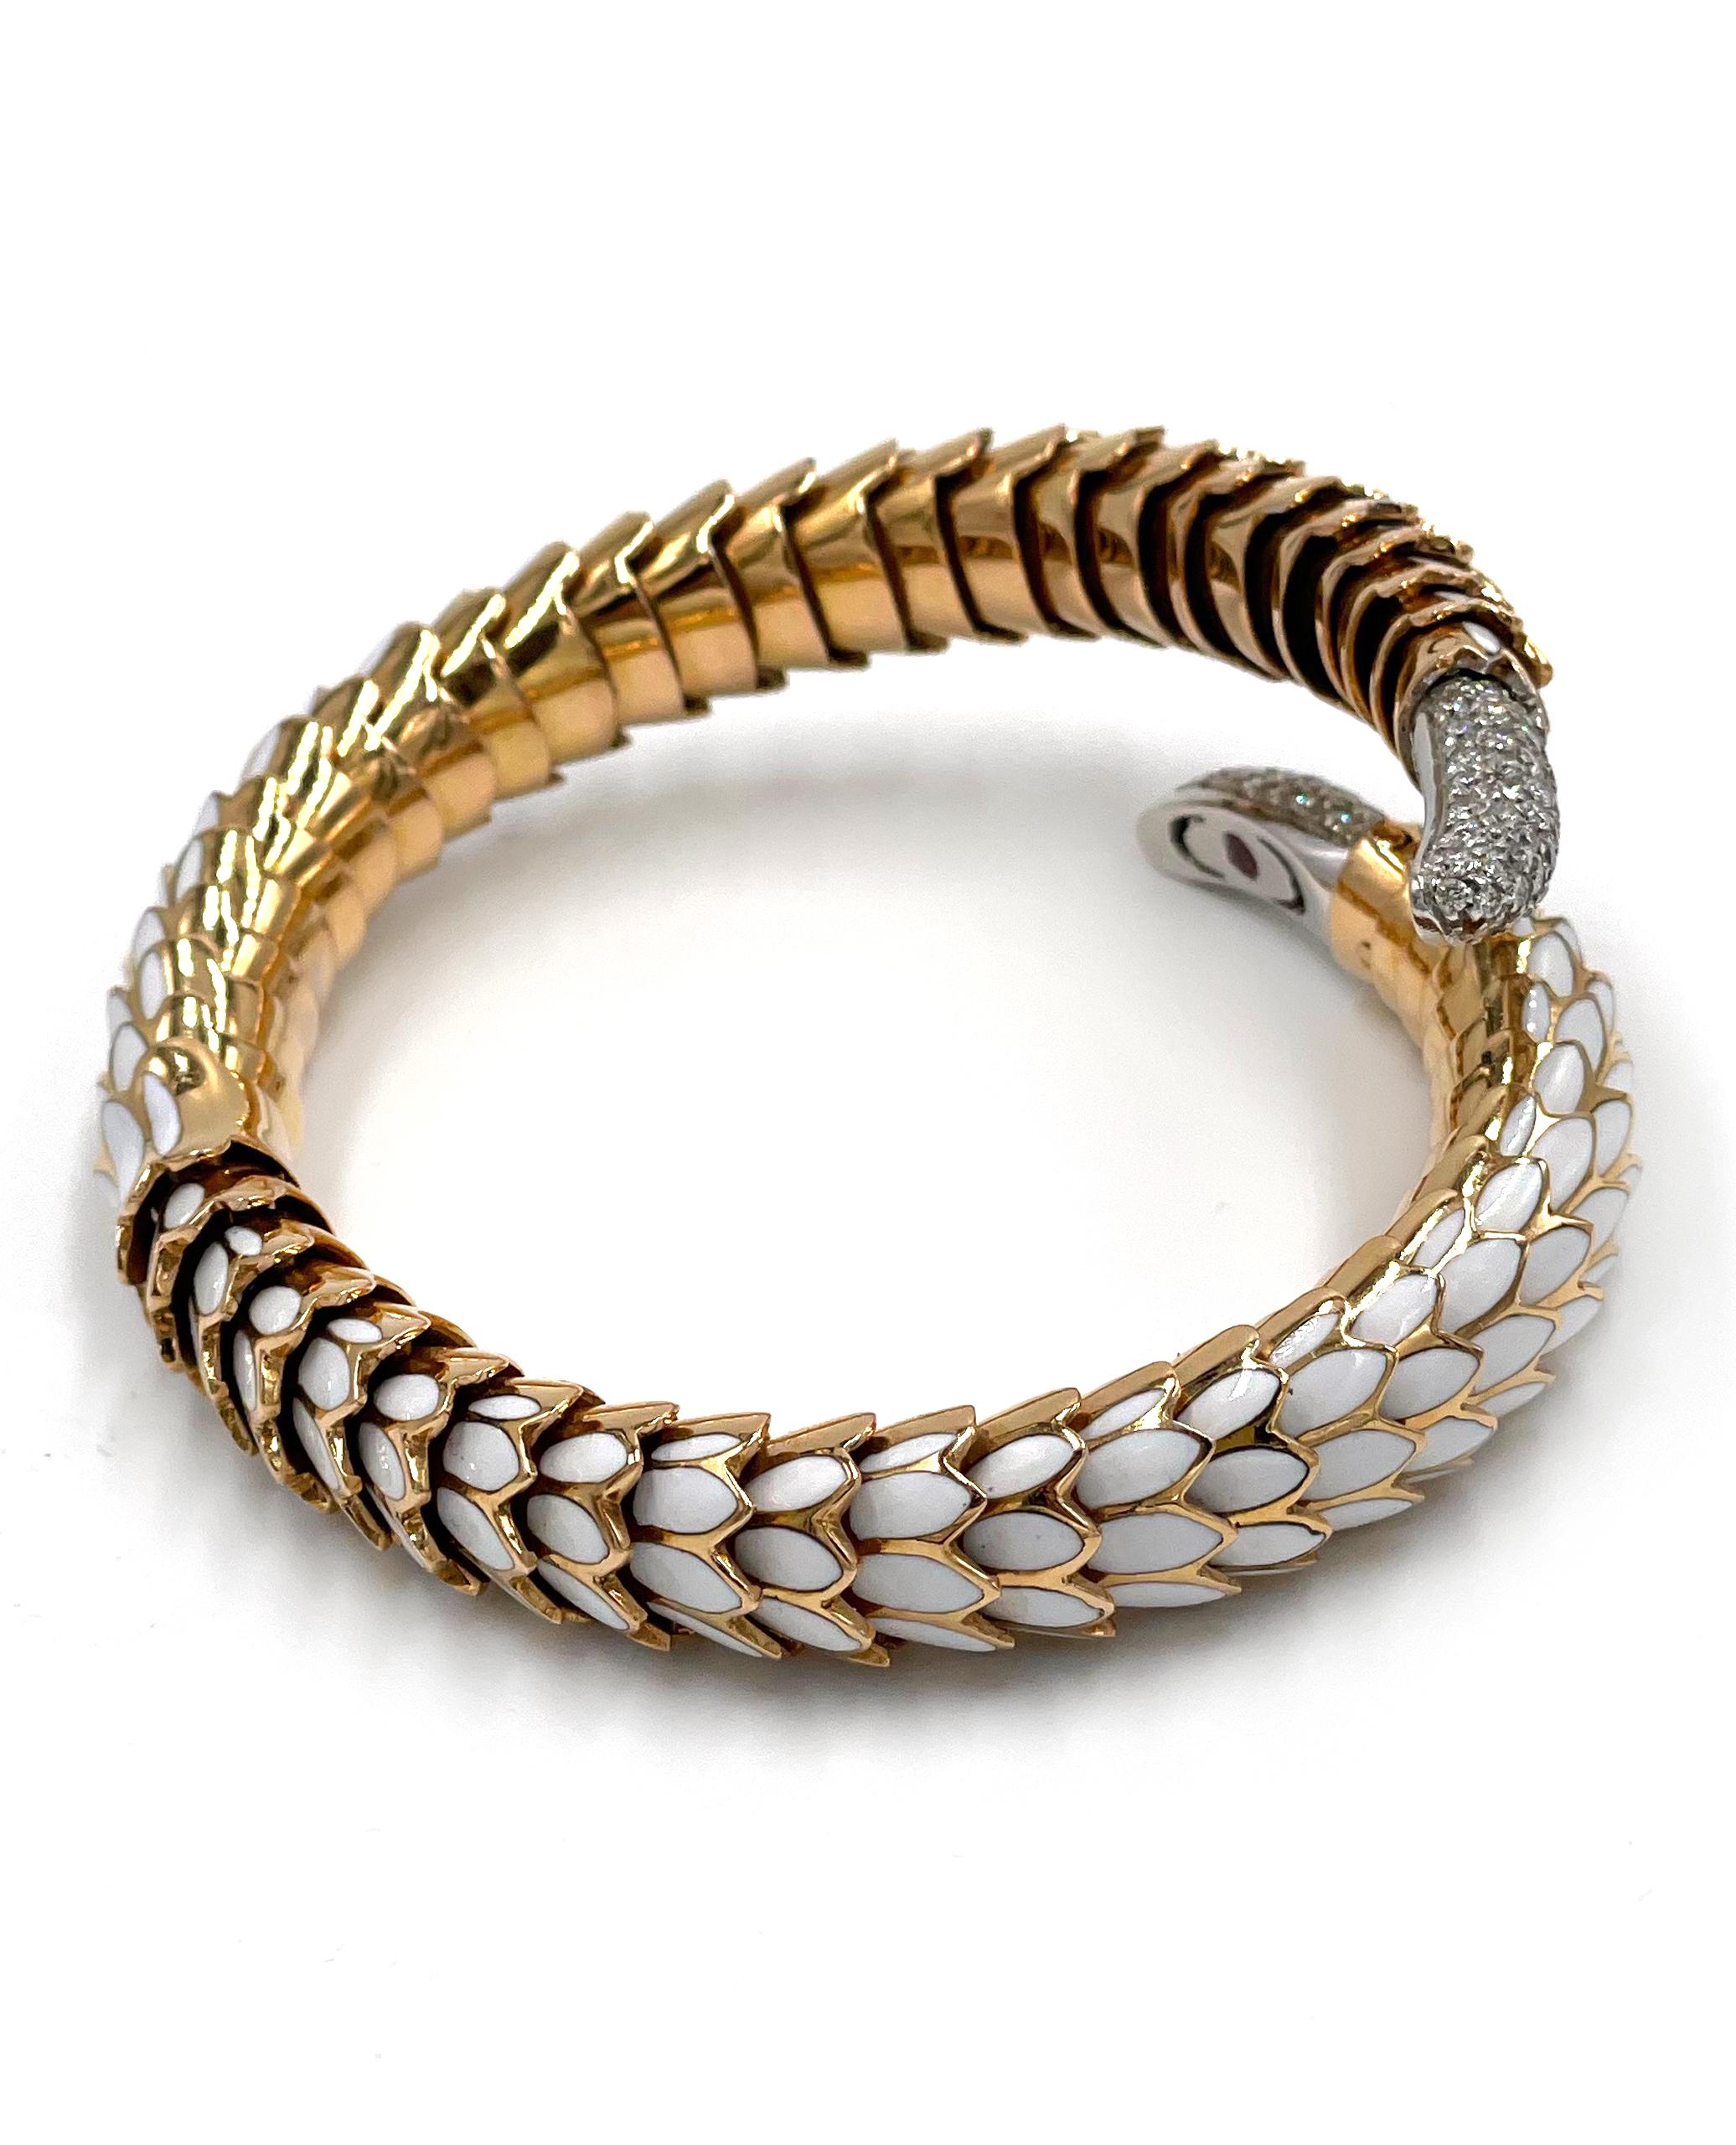 gold bracelet price in riyadh